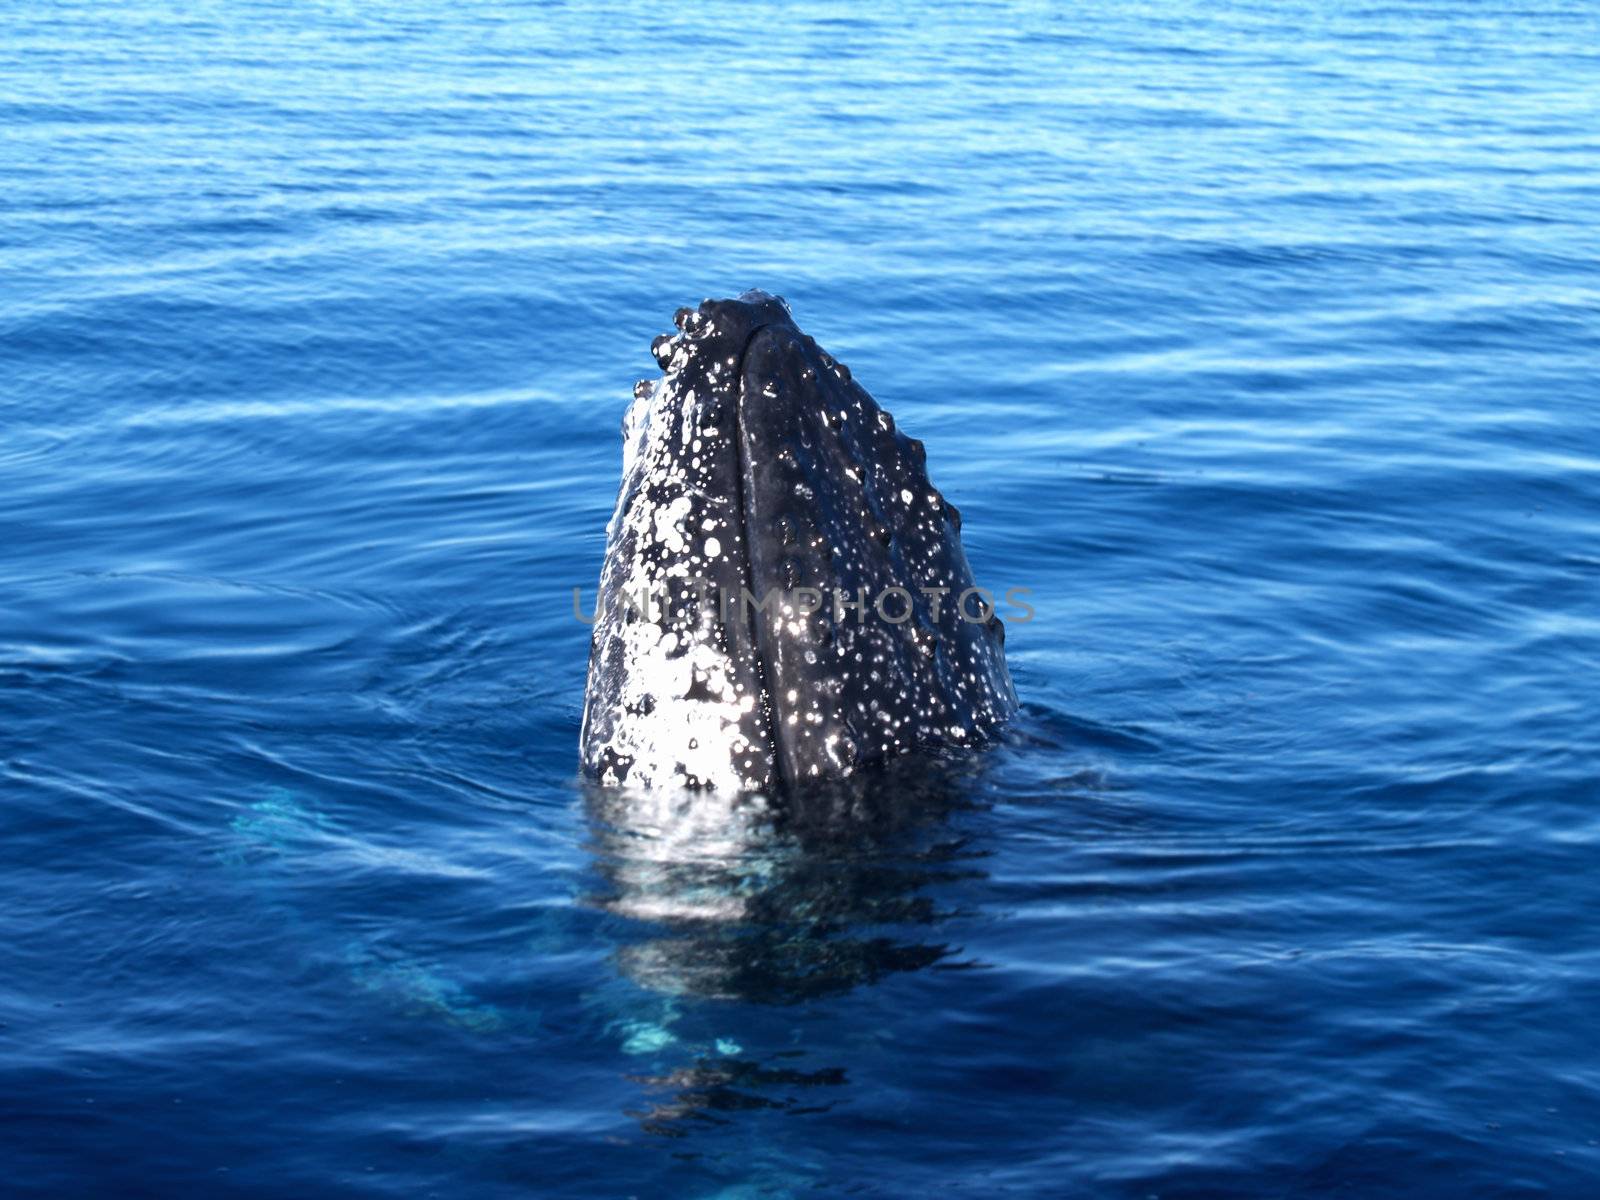 Humpback whale breaching the ocean in australia